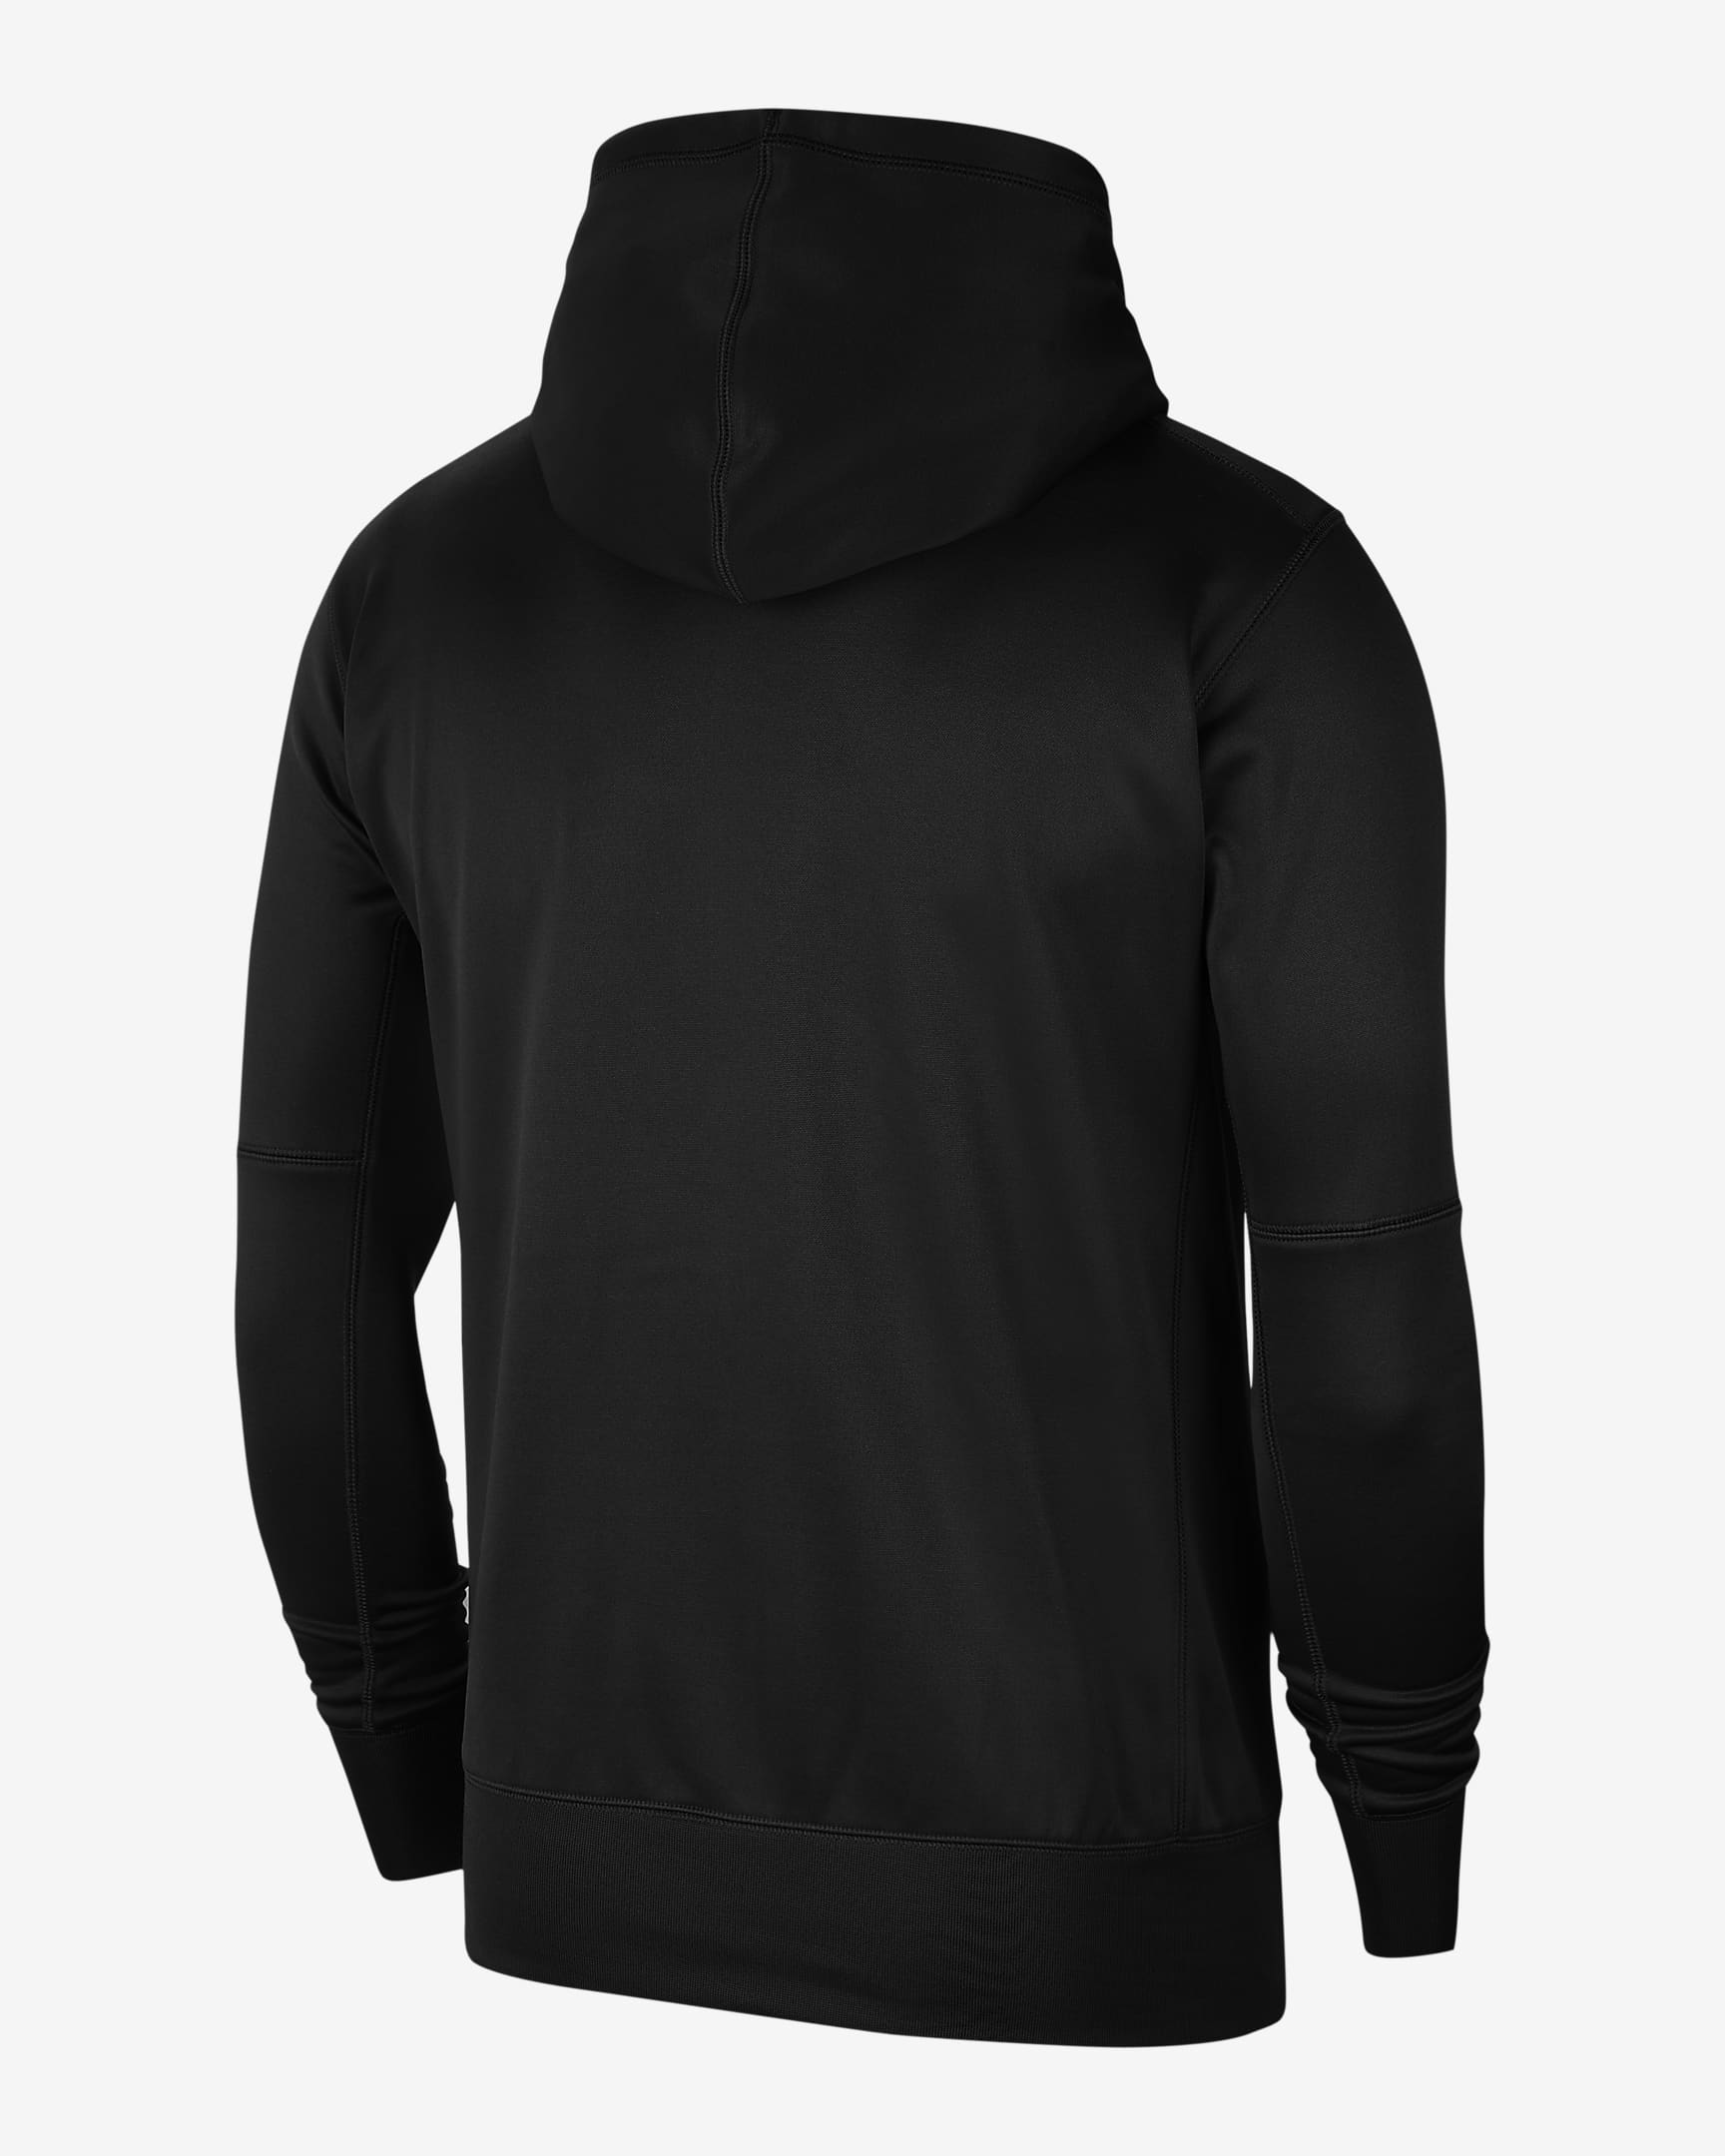 Sudadera con capucha de fútbol para hombre Nike Therma. Nike.com